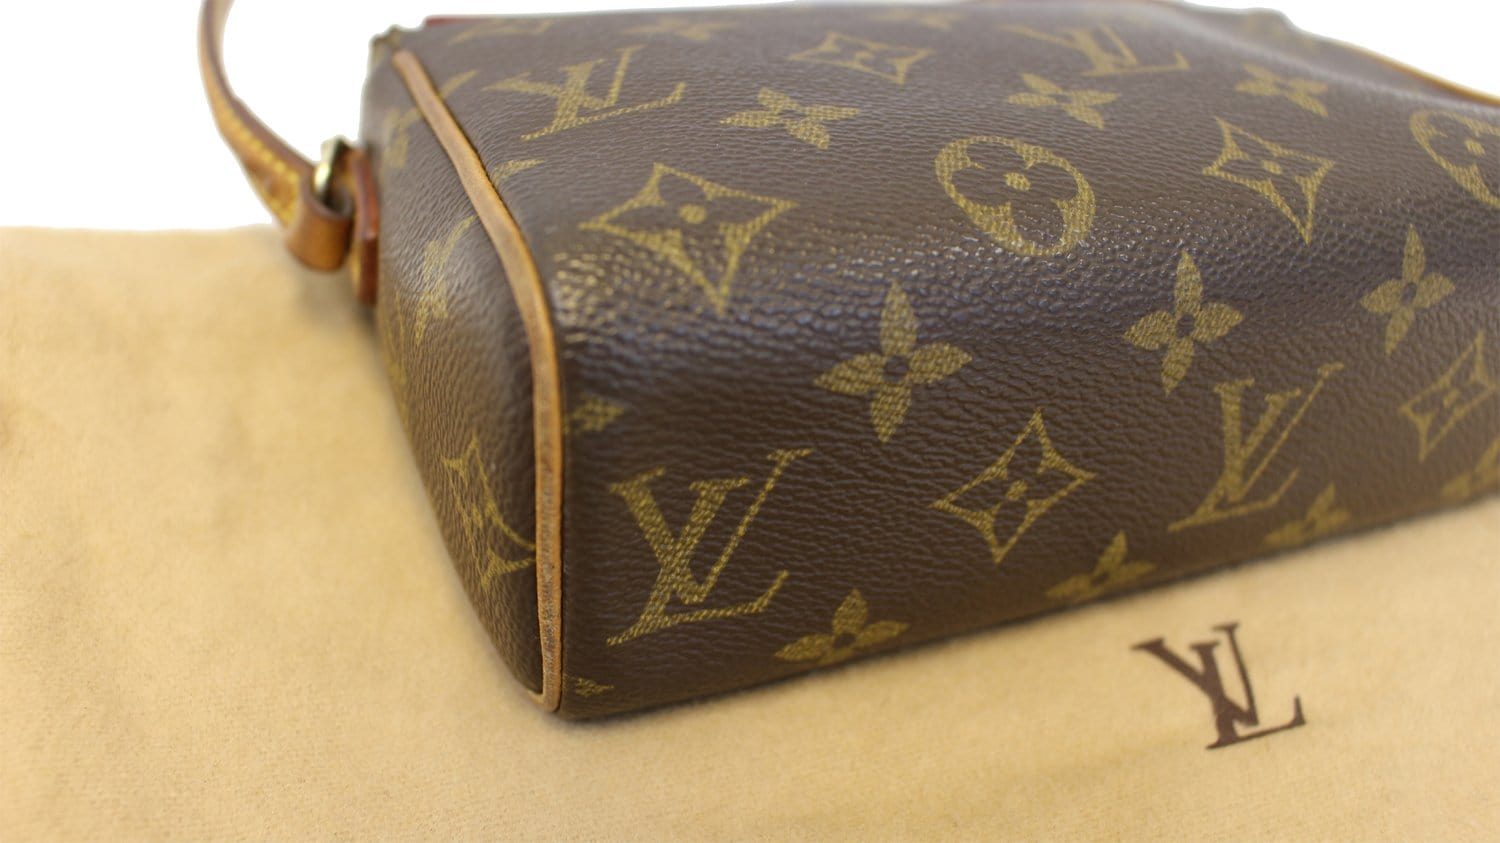 Louis Vuitton Monogram Recital Handbag Bag